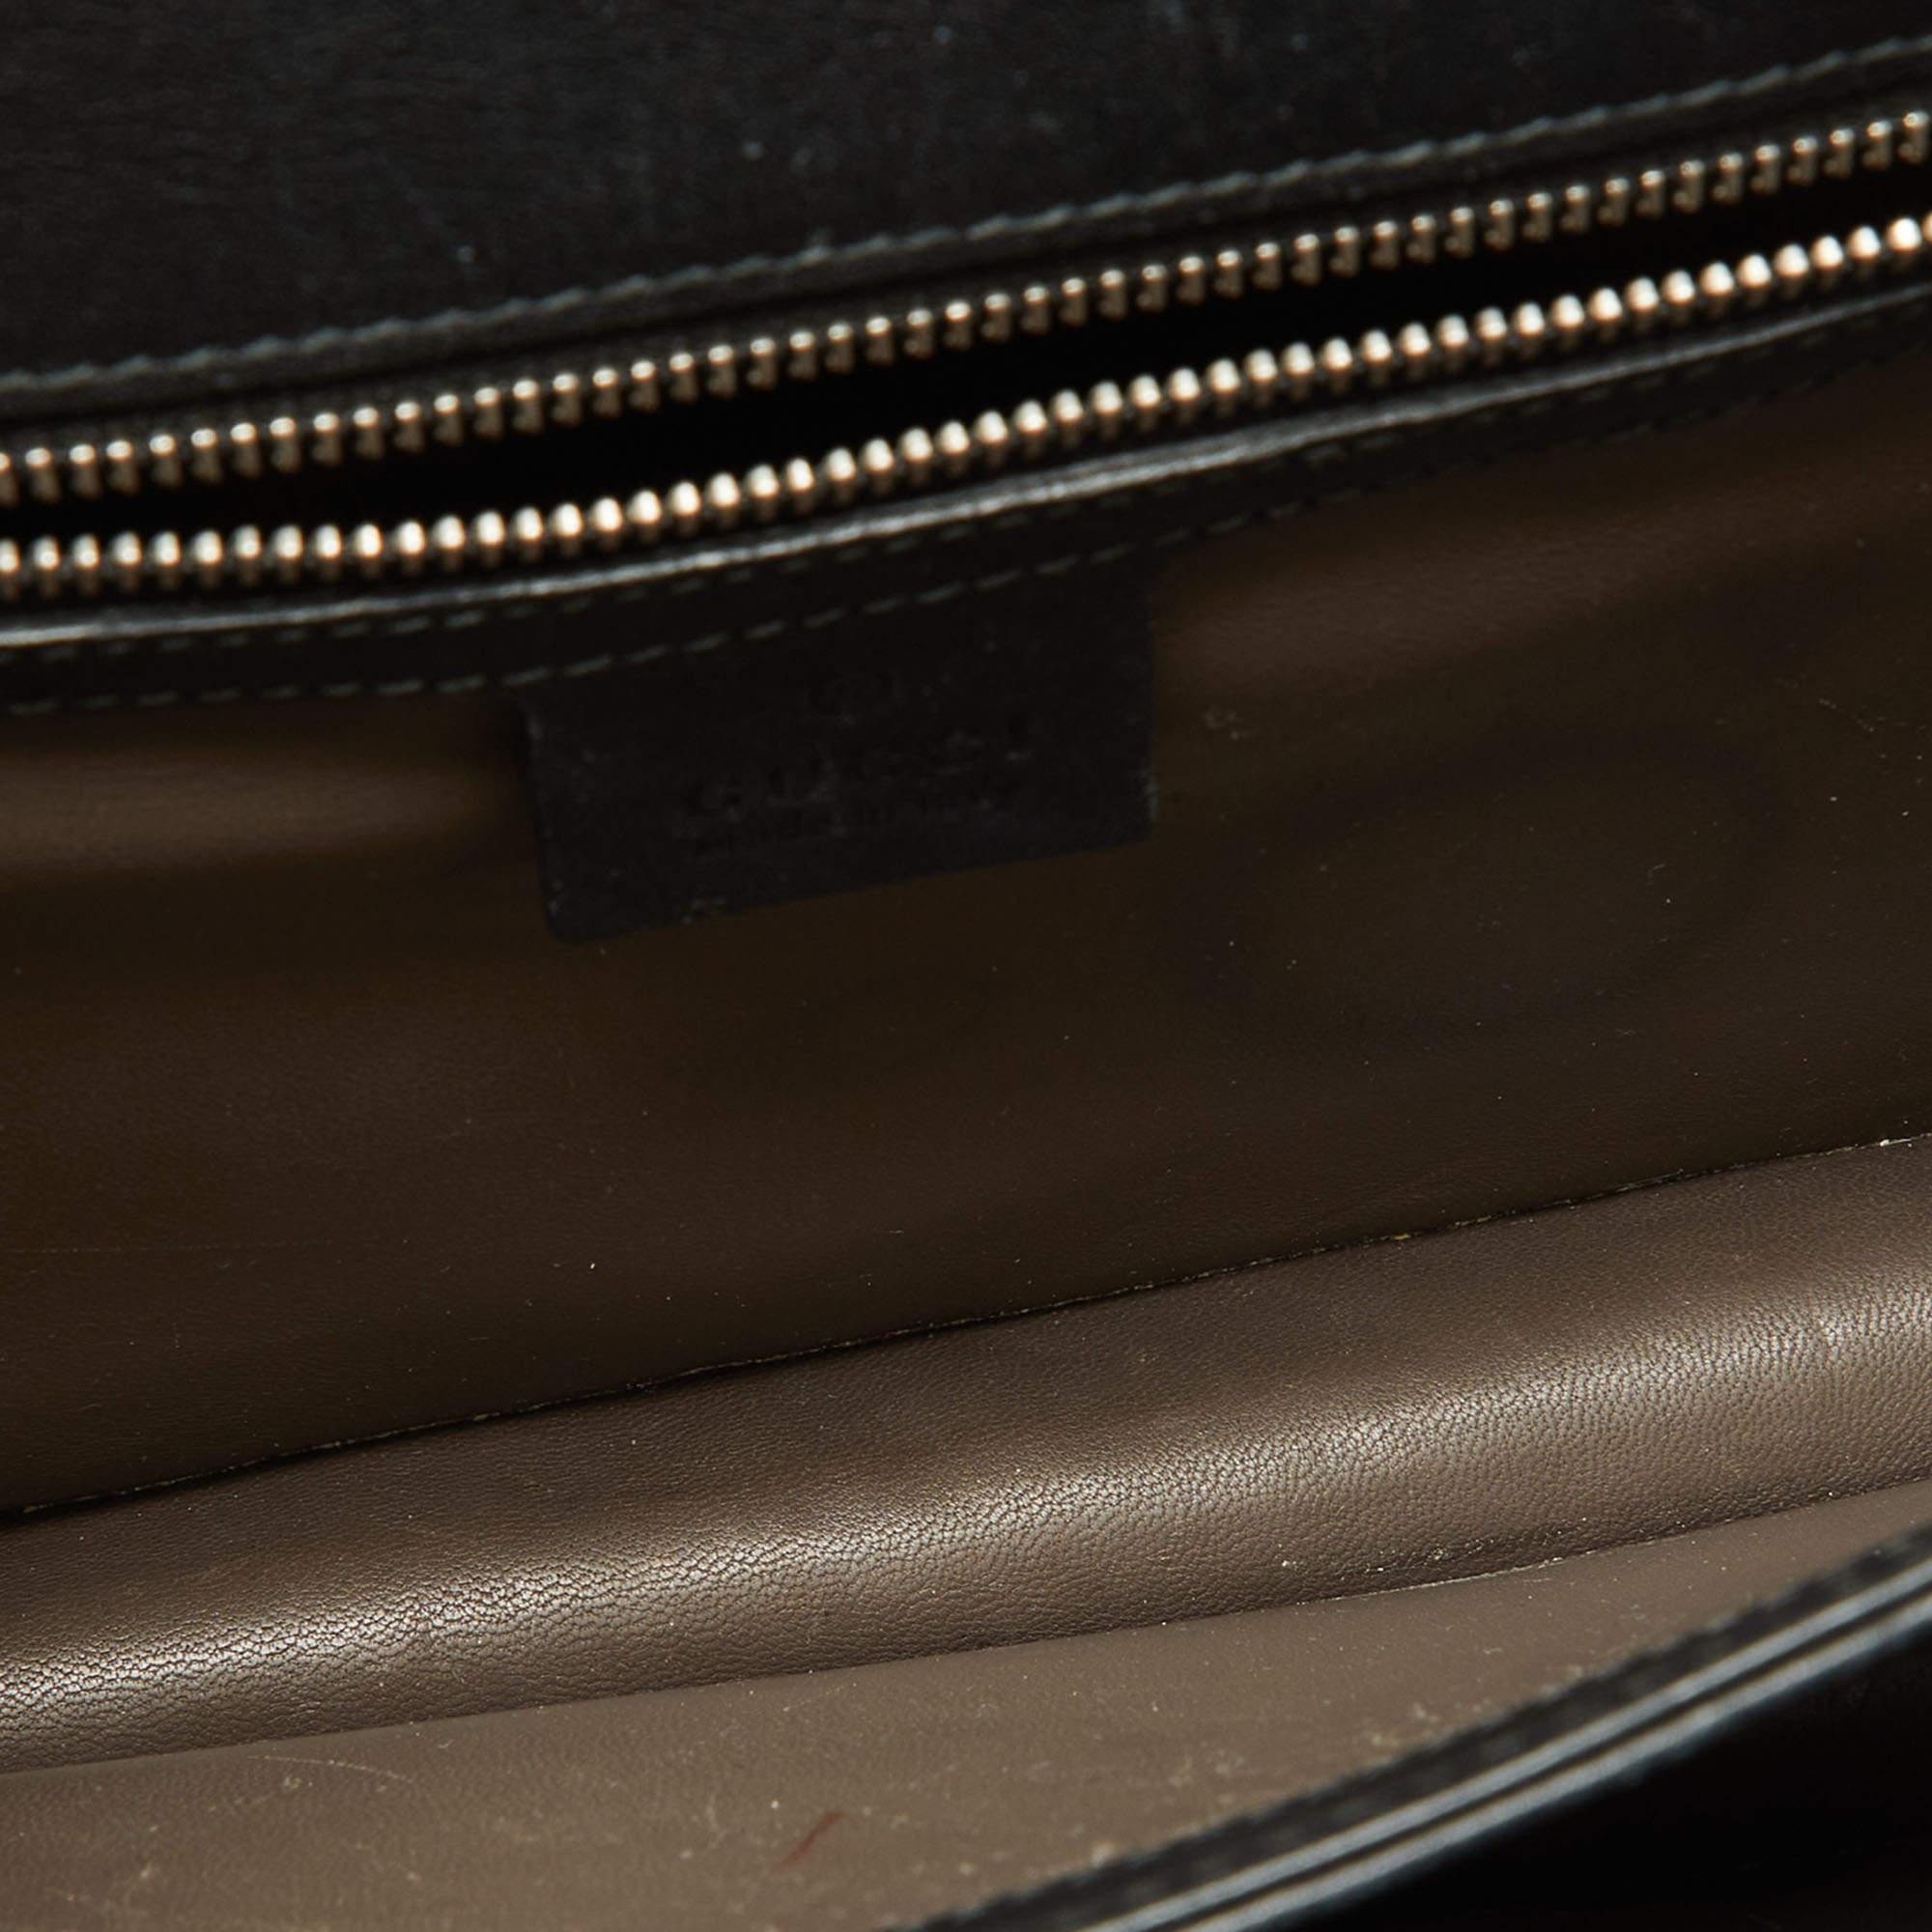 Gucci Black Leather Medium Interlocking G Shoulder Bag 9